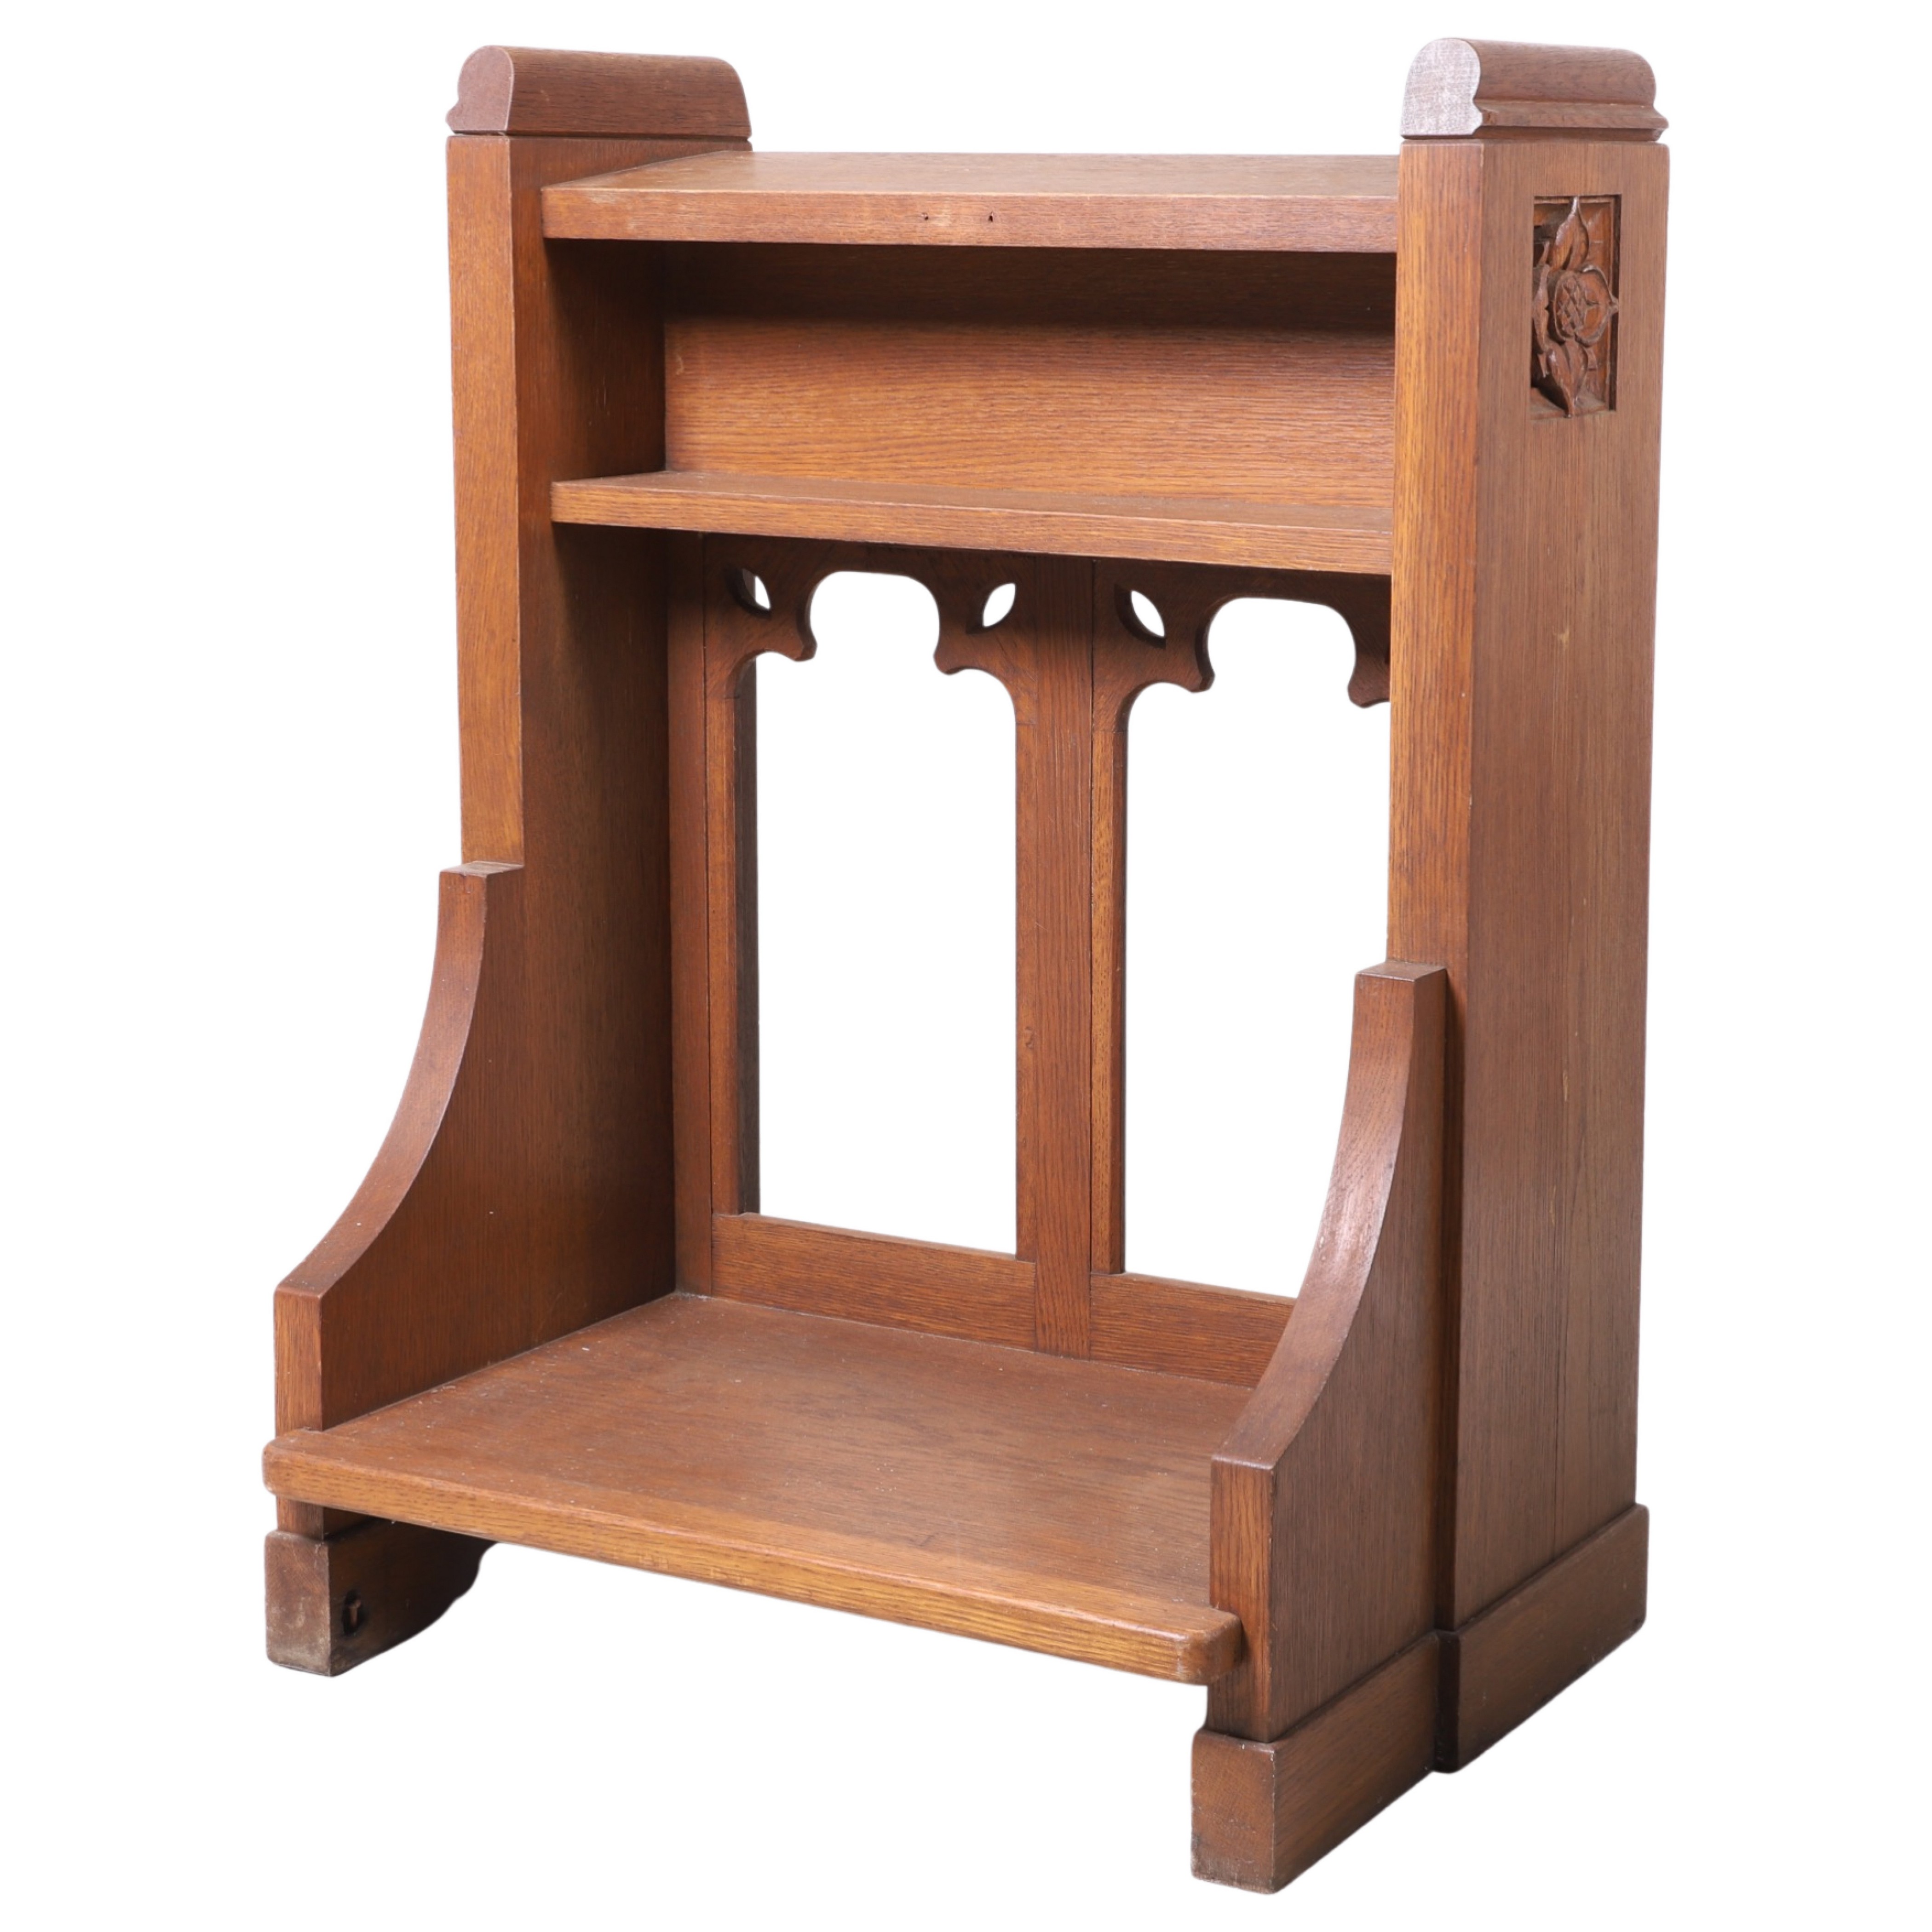 Carved oak pulpit, 36"h x 25"w